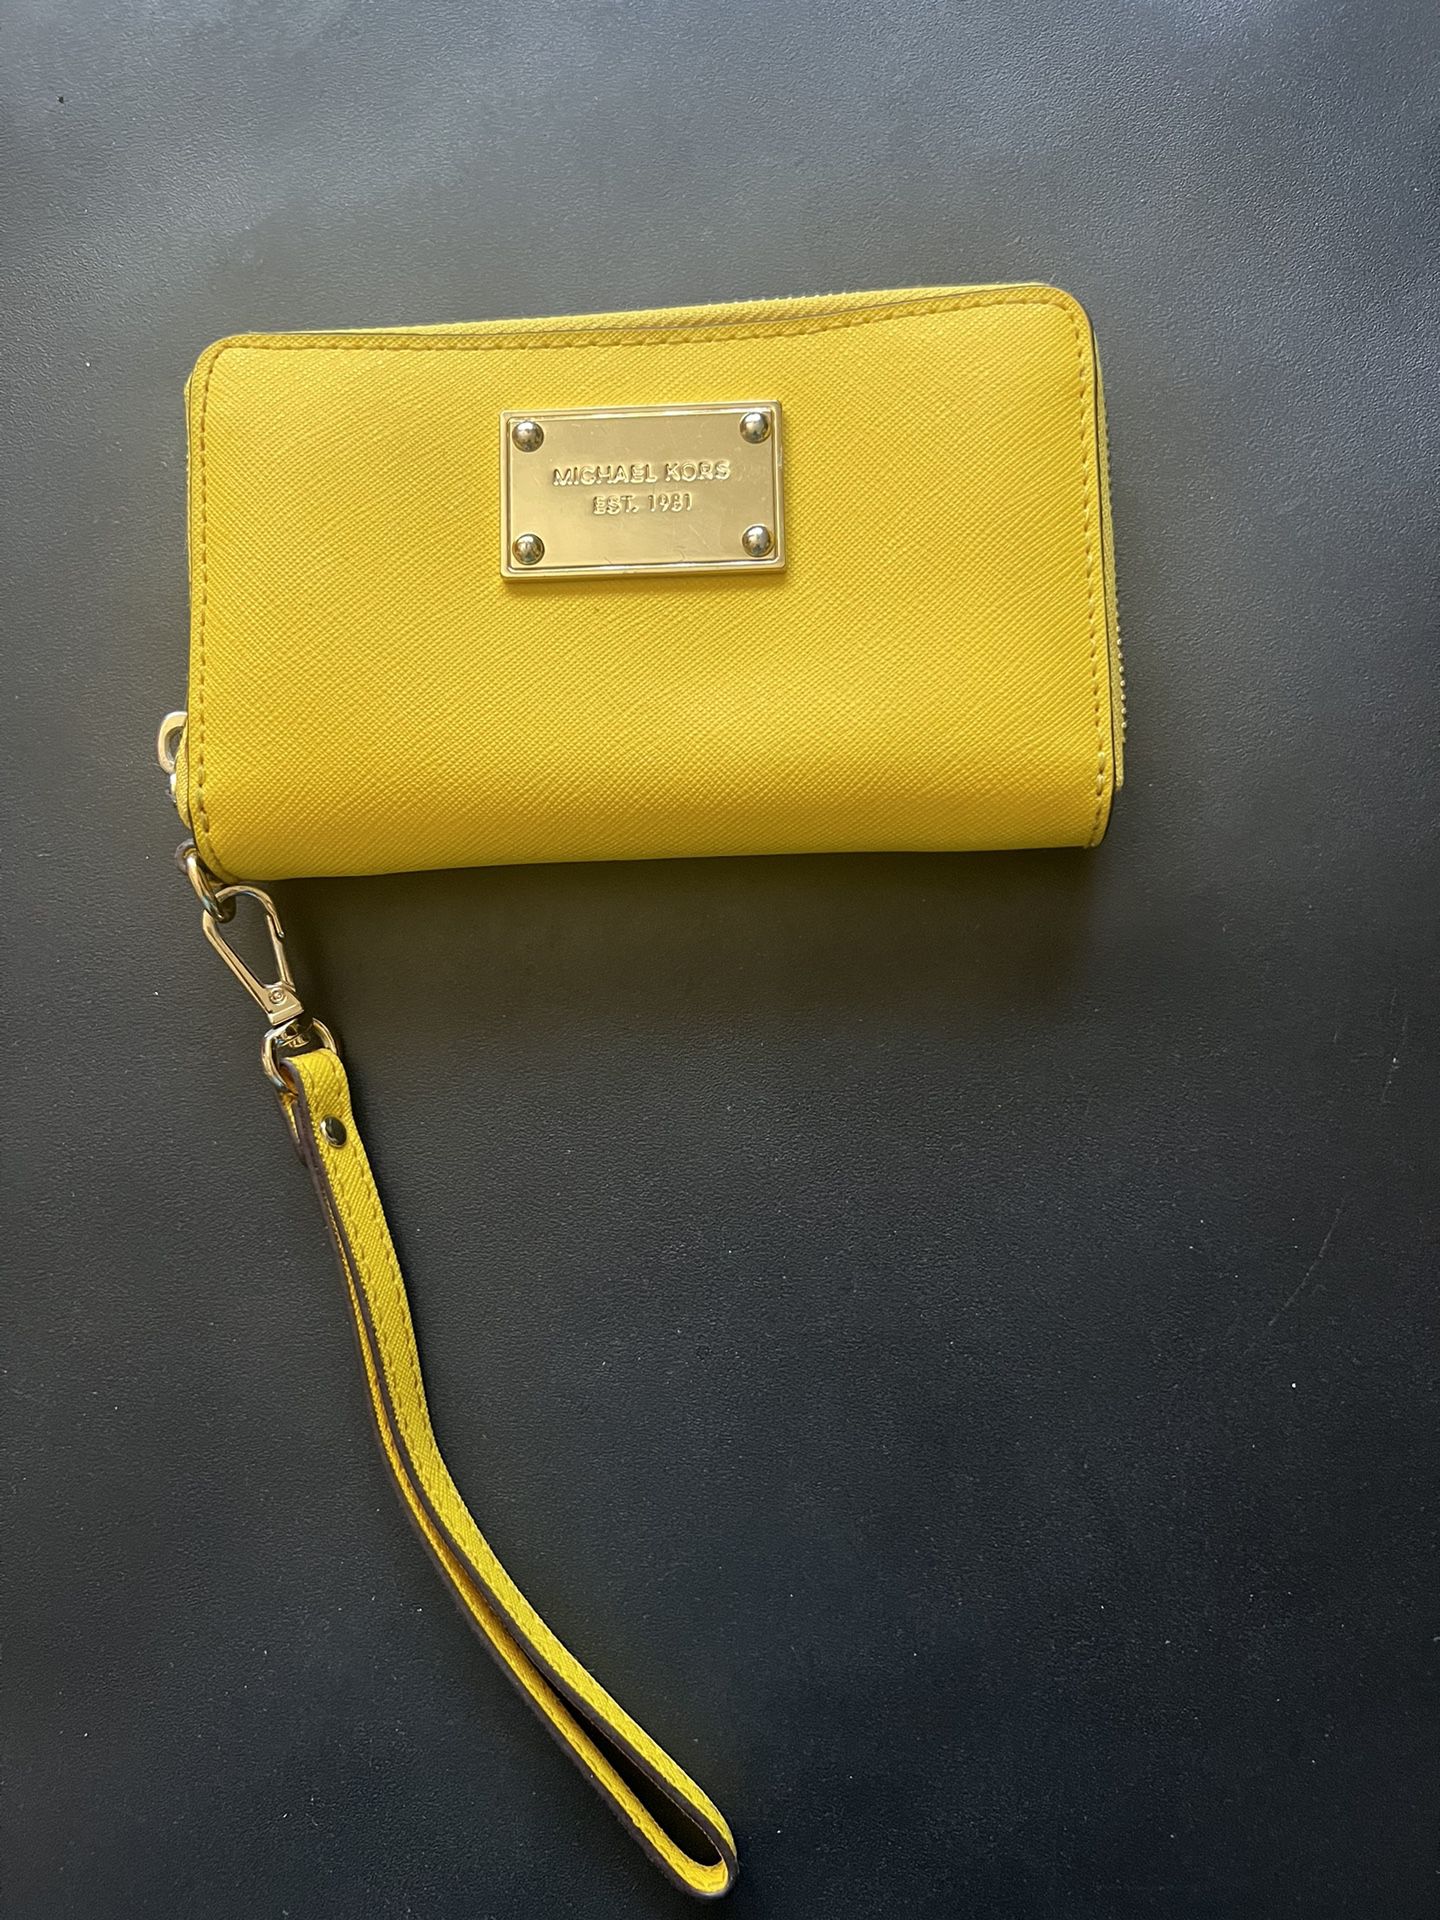 michael kors wallet yellow small